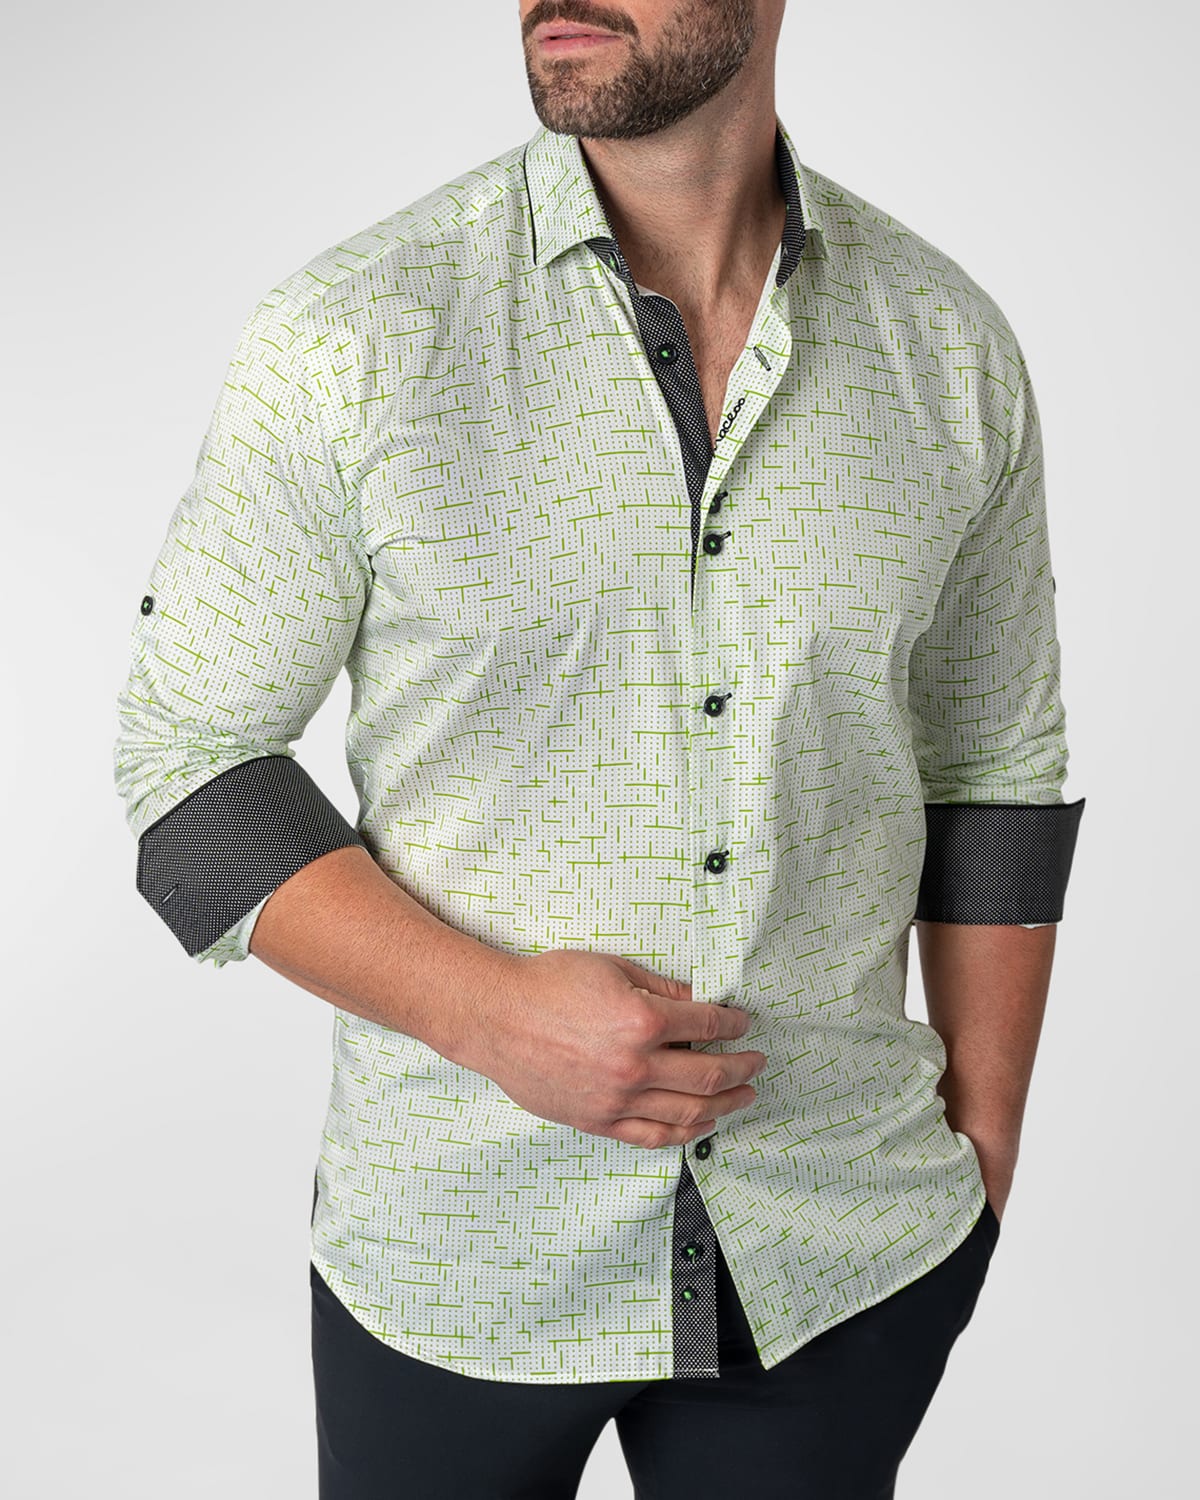 Men's Contrast-Reverse Patterned Dress Shirt